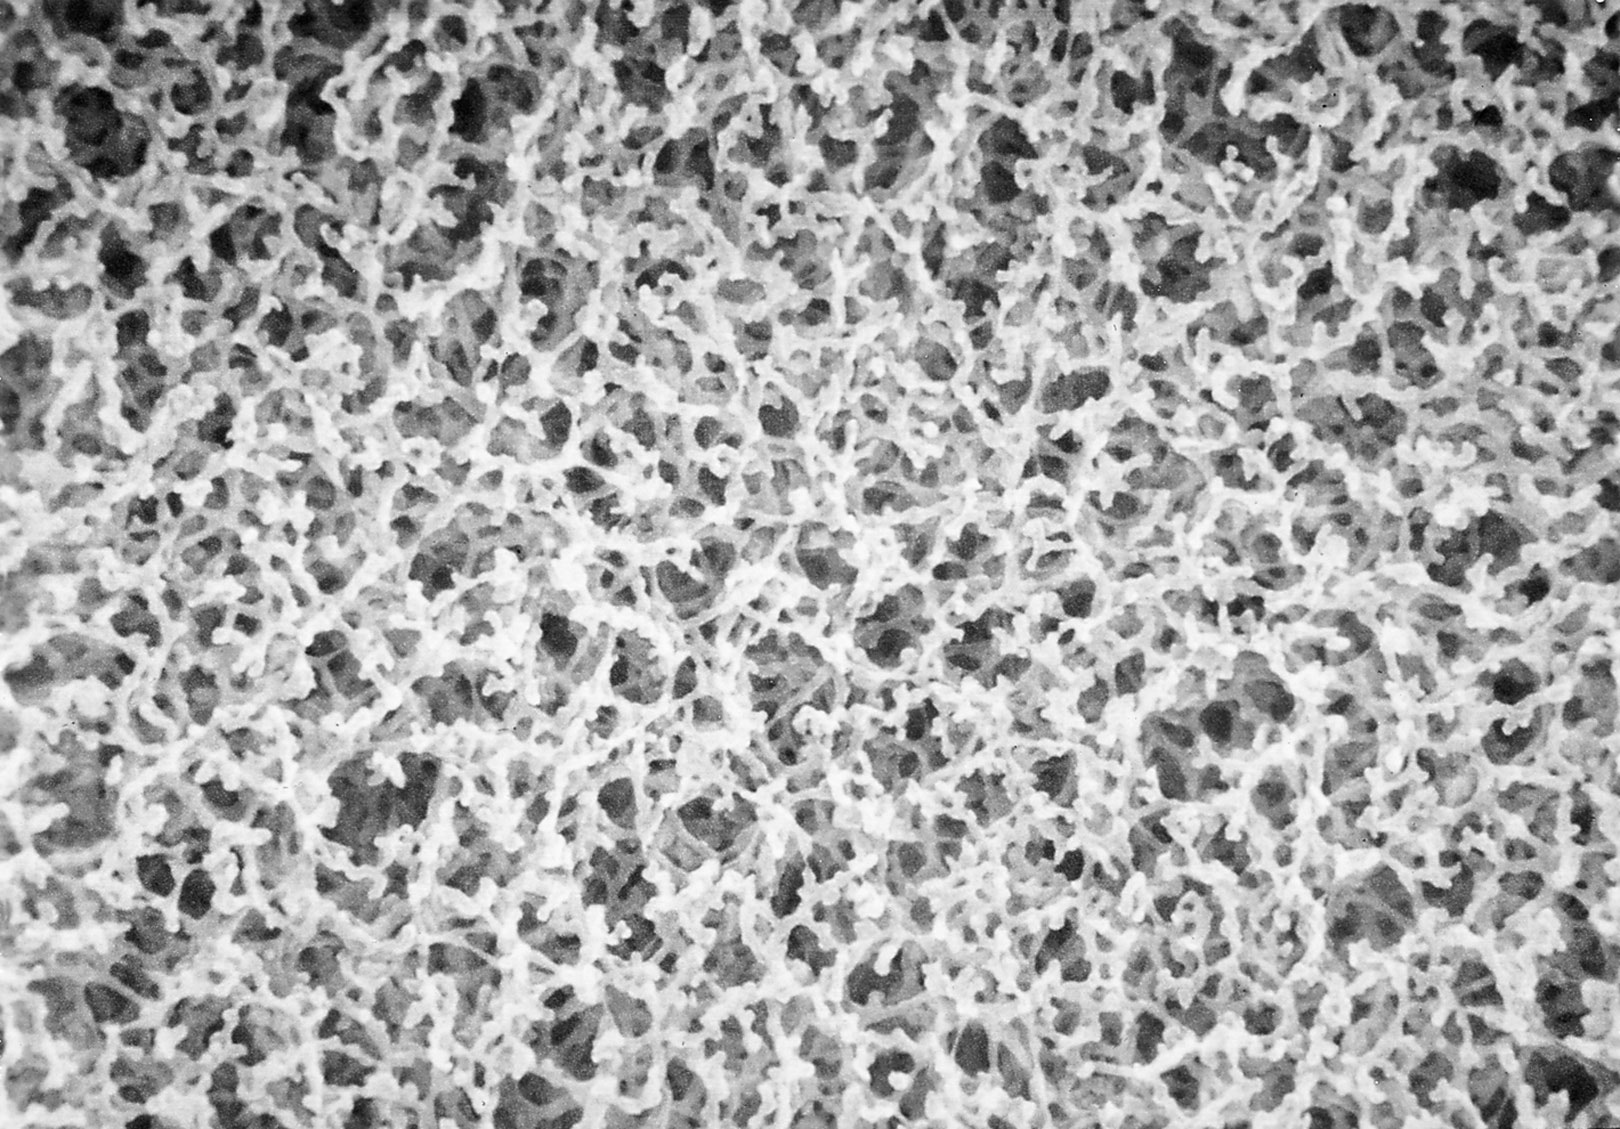 Membrana de ésteres mezclados de nitrocelulosa. GVS. Material: ME. Ø (mm): 47. Tamaño poro (µm): 0,65. Estéril: No. Cuadrícula: No. Color: Blanca